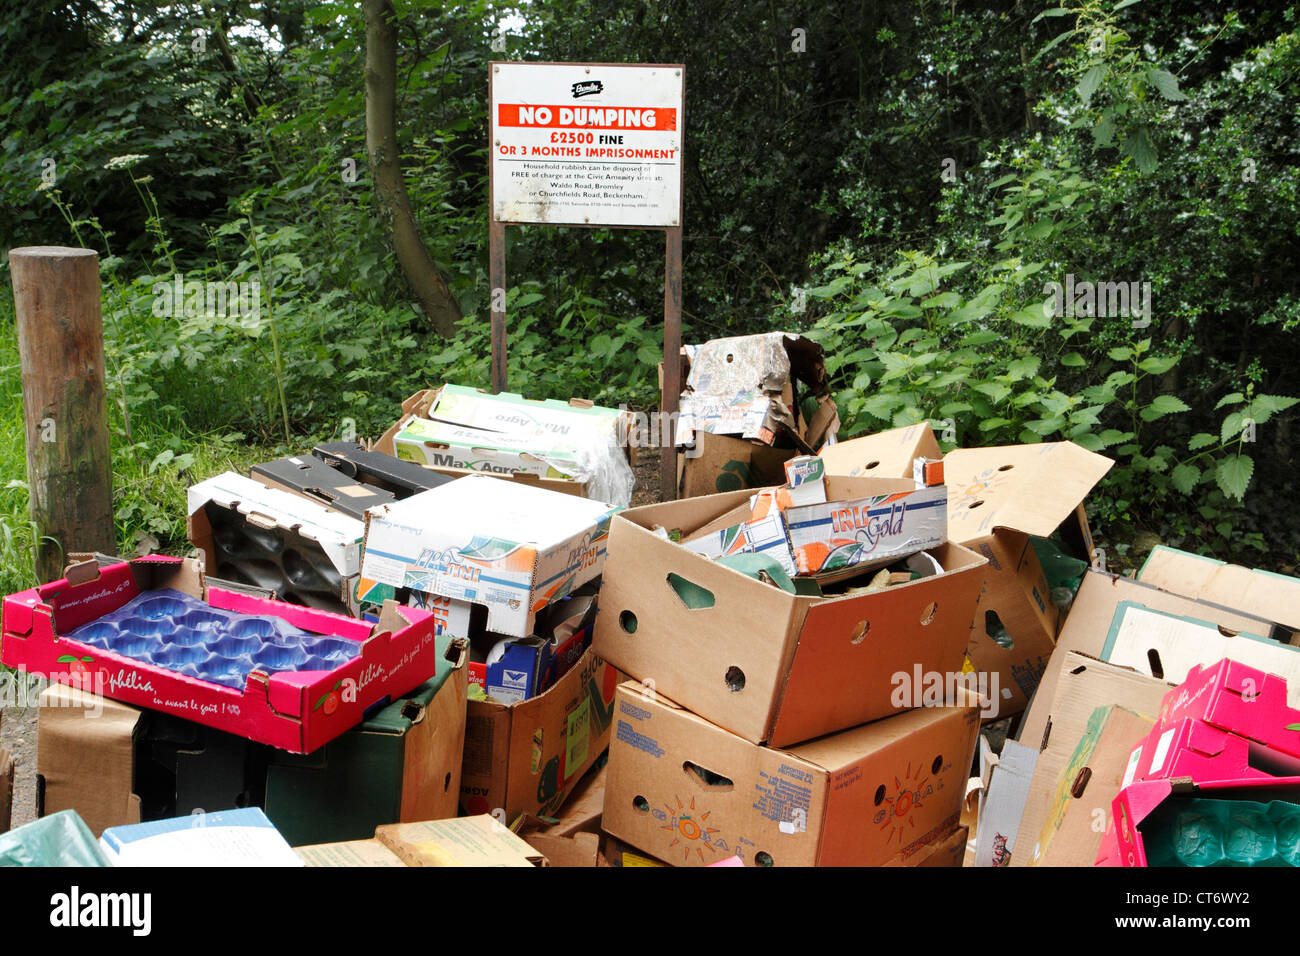 Müll-Fliege gekippt vor der Nr. Dumping Warnschild, Bromley, Kent Stockfoto